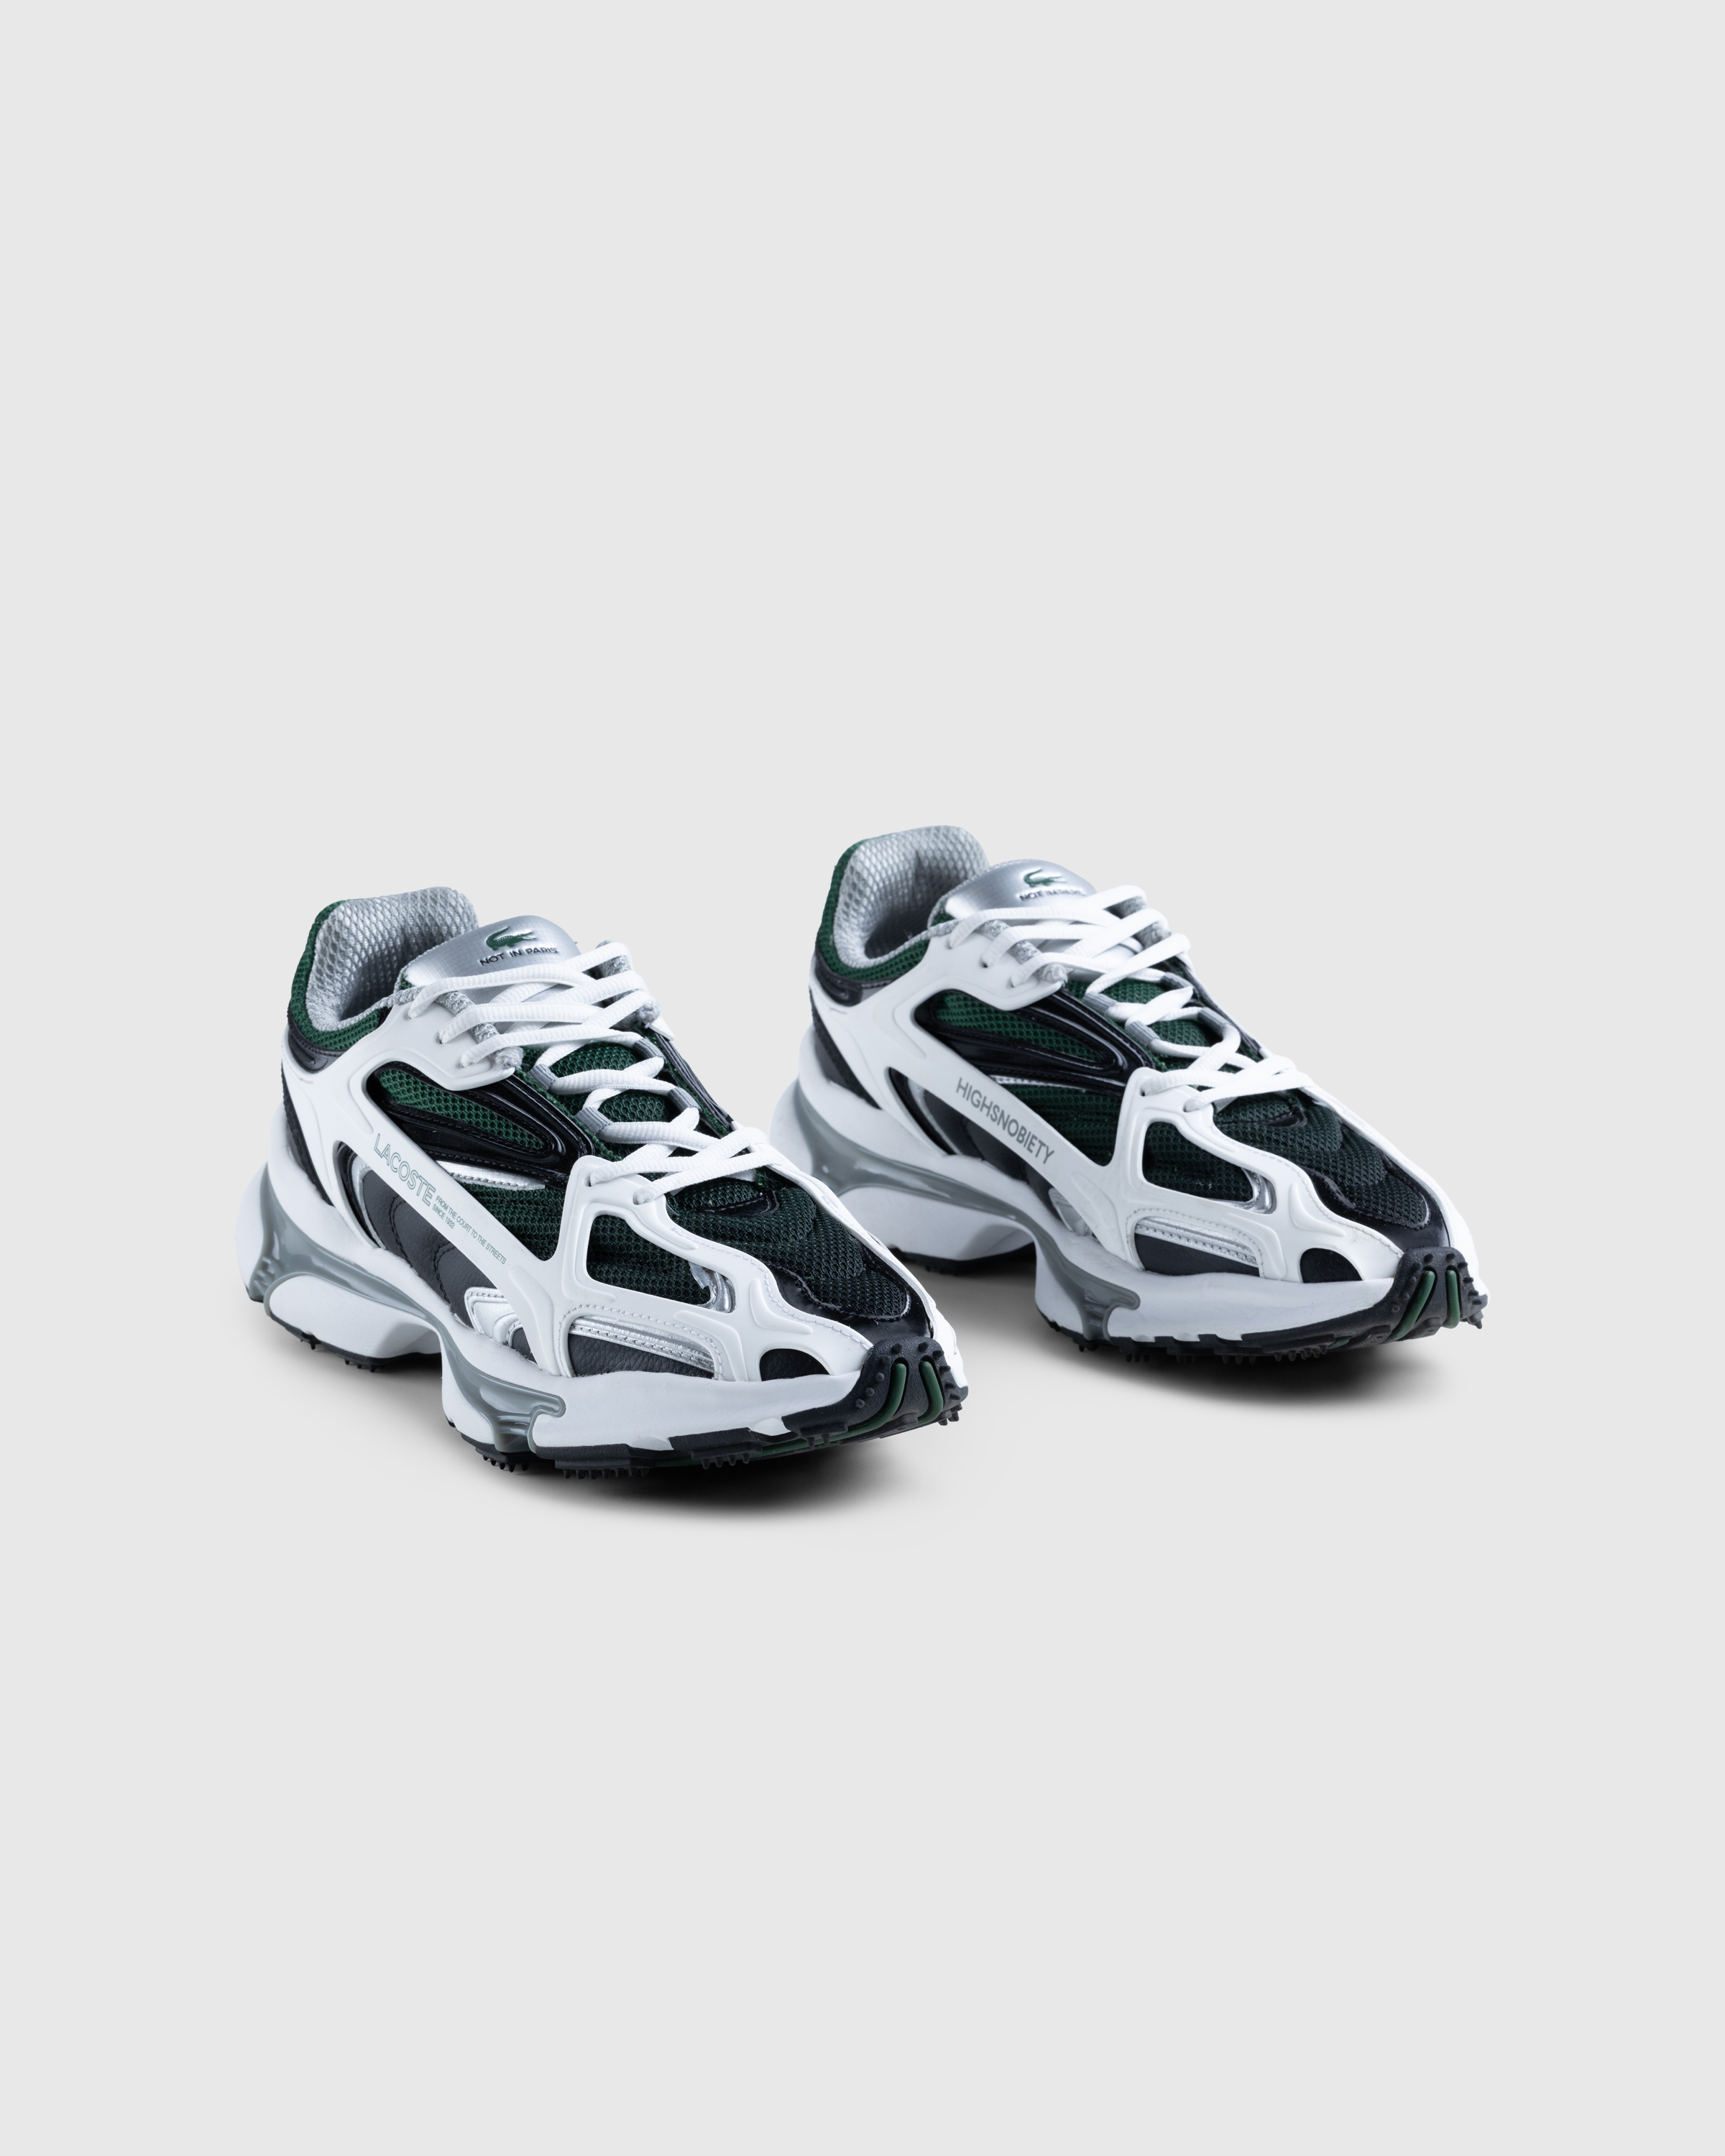 Lacoste x Highsnobiety – L003 2k24 (M) "Not In Paris" Multi - Low Top Sneakers - Green - Image 3